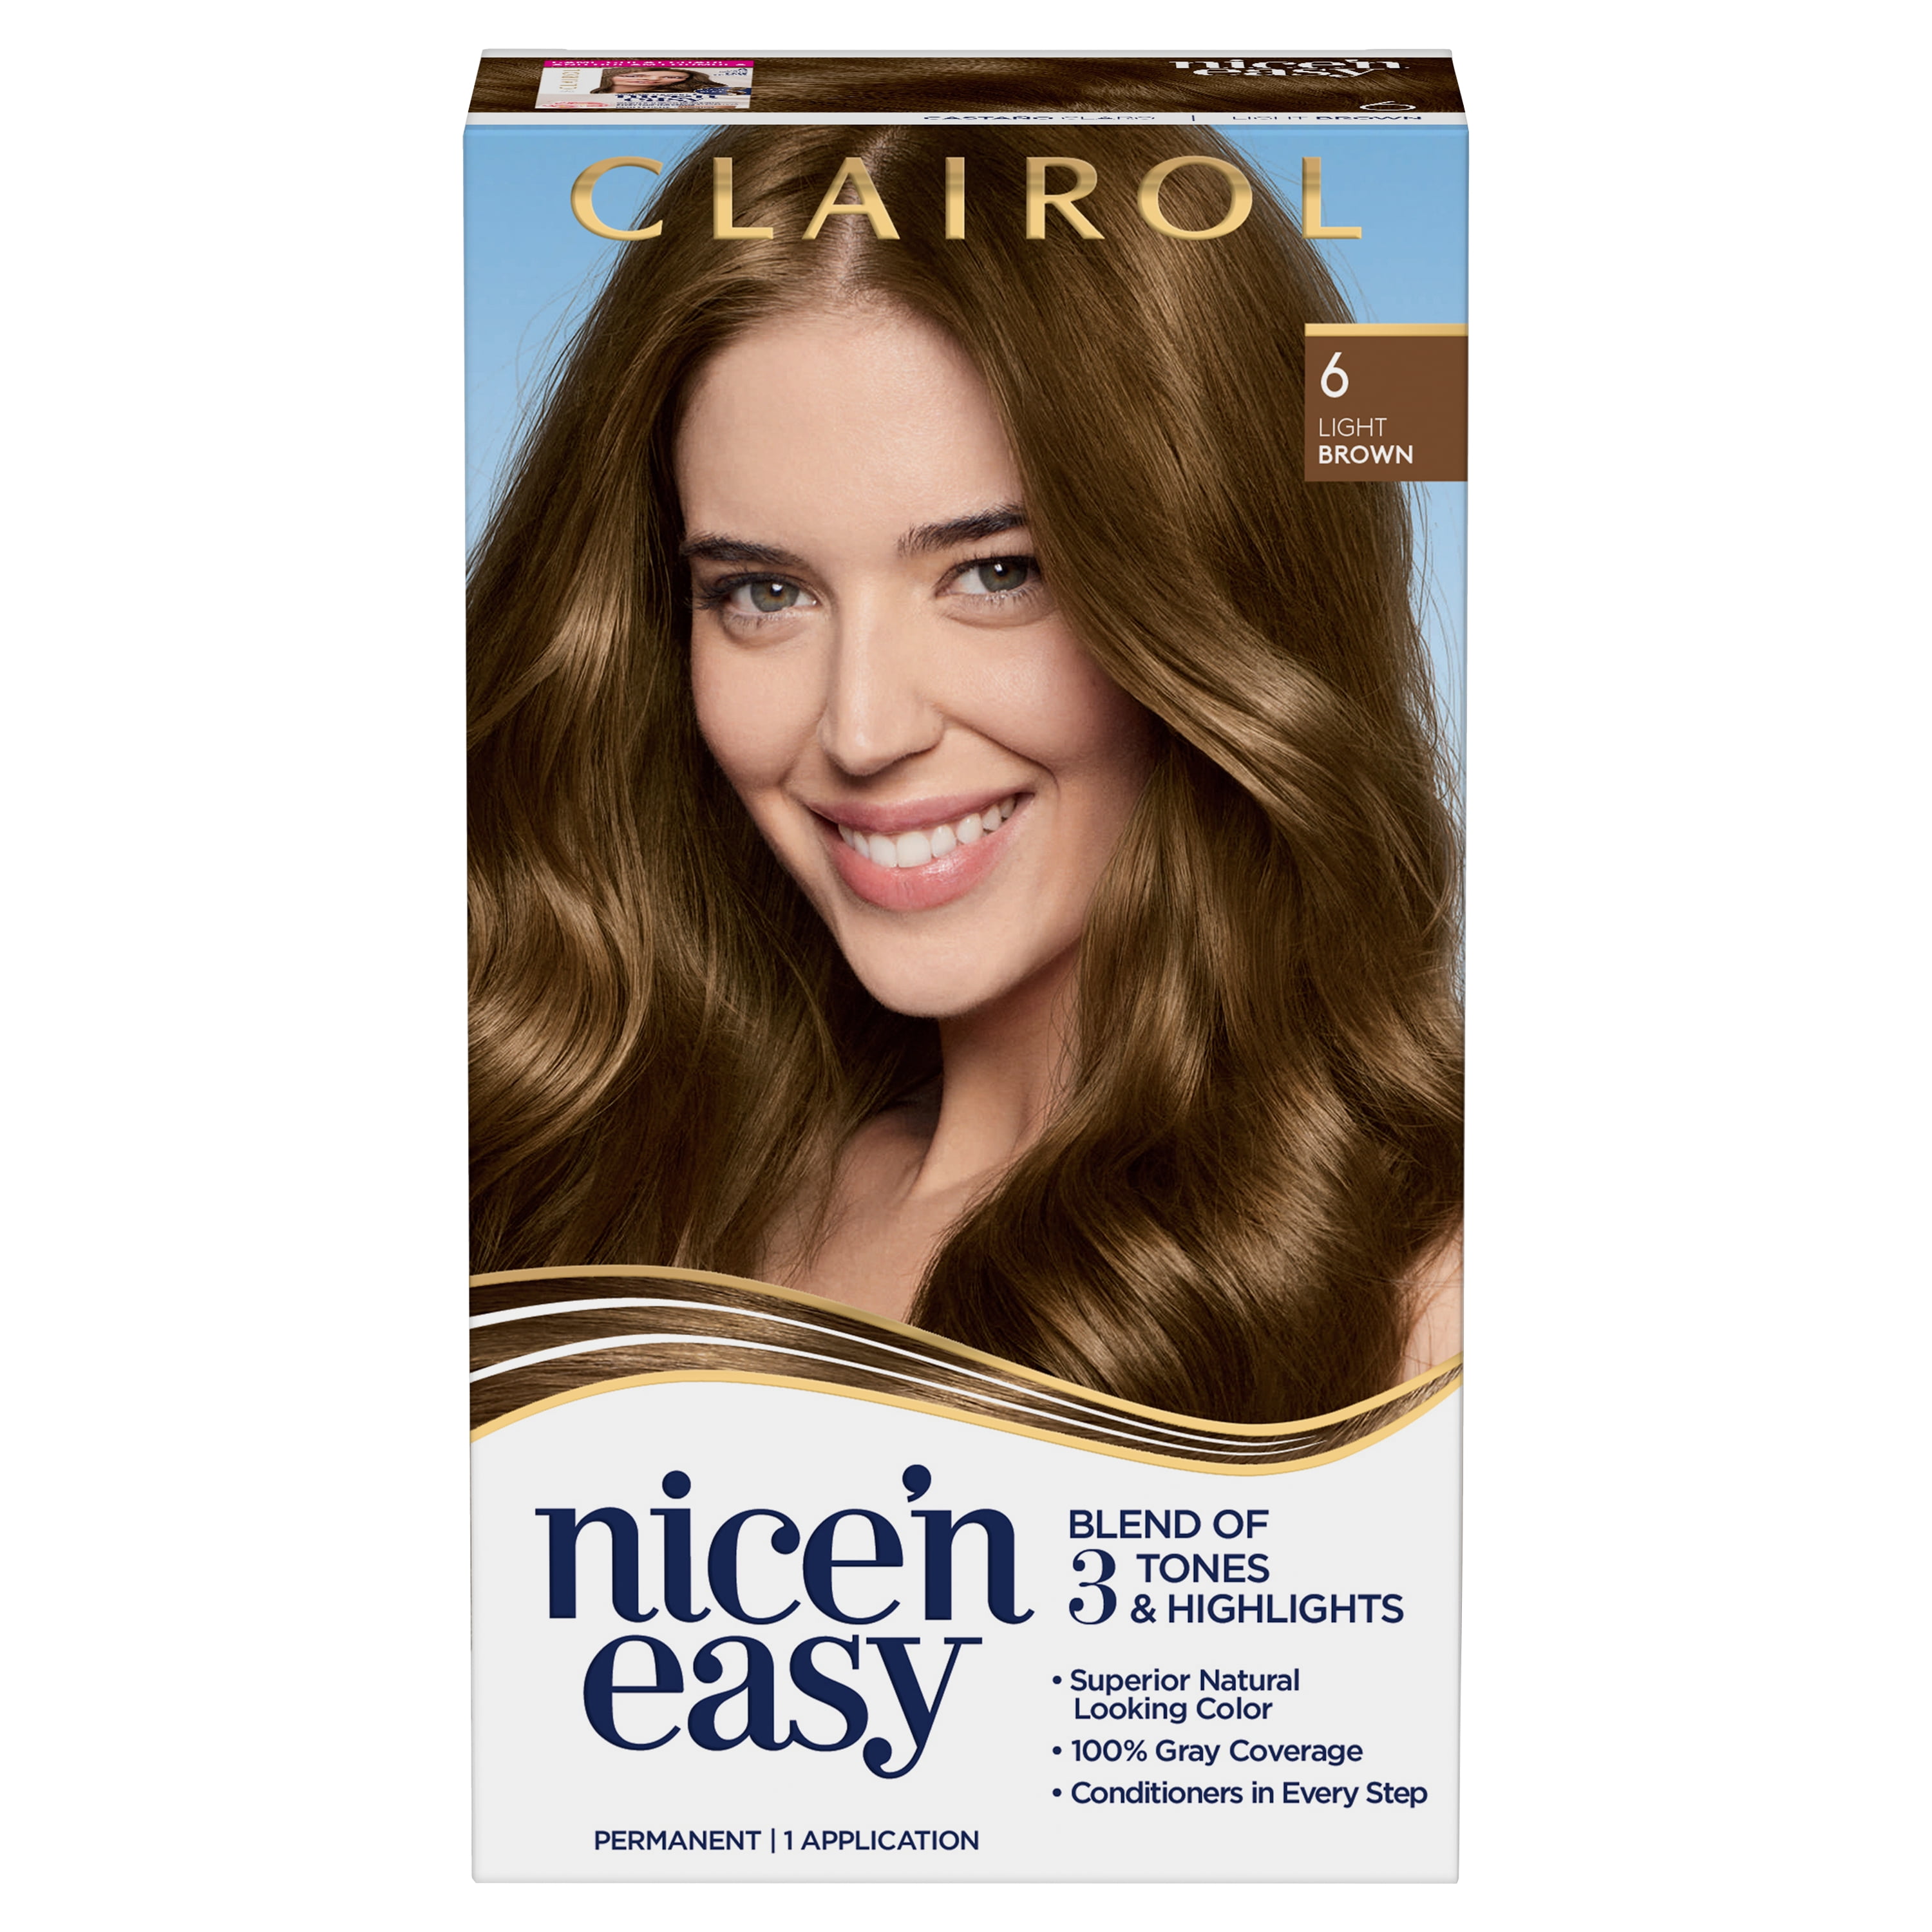 Clairol Nice'n Easy Permanent Hair Color Creme, 5RB Medium Reddish Brown, 1  Application, Hair Dye 